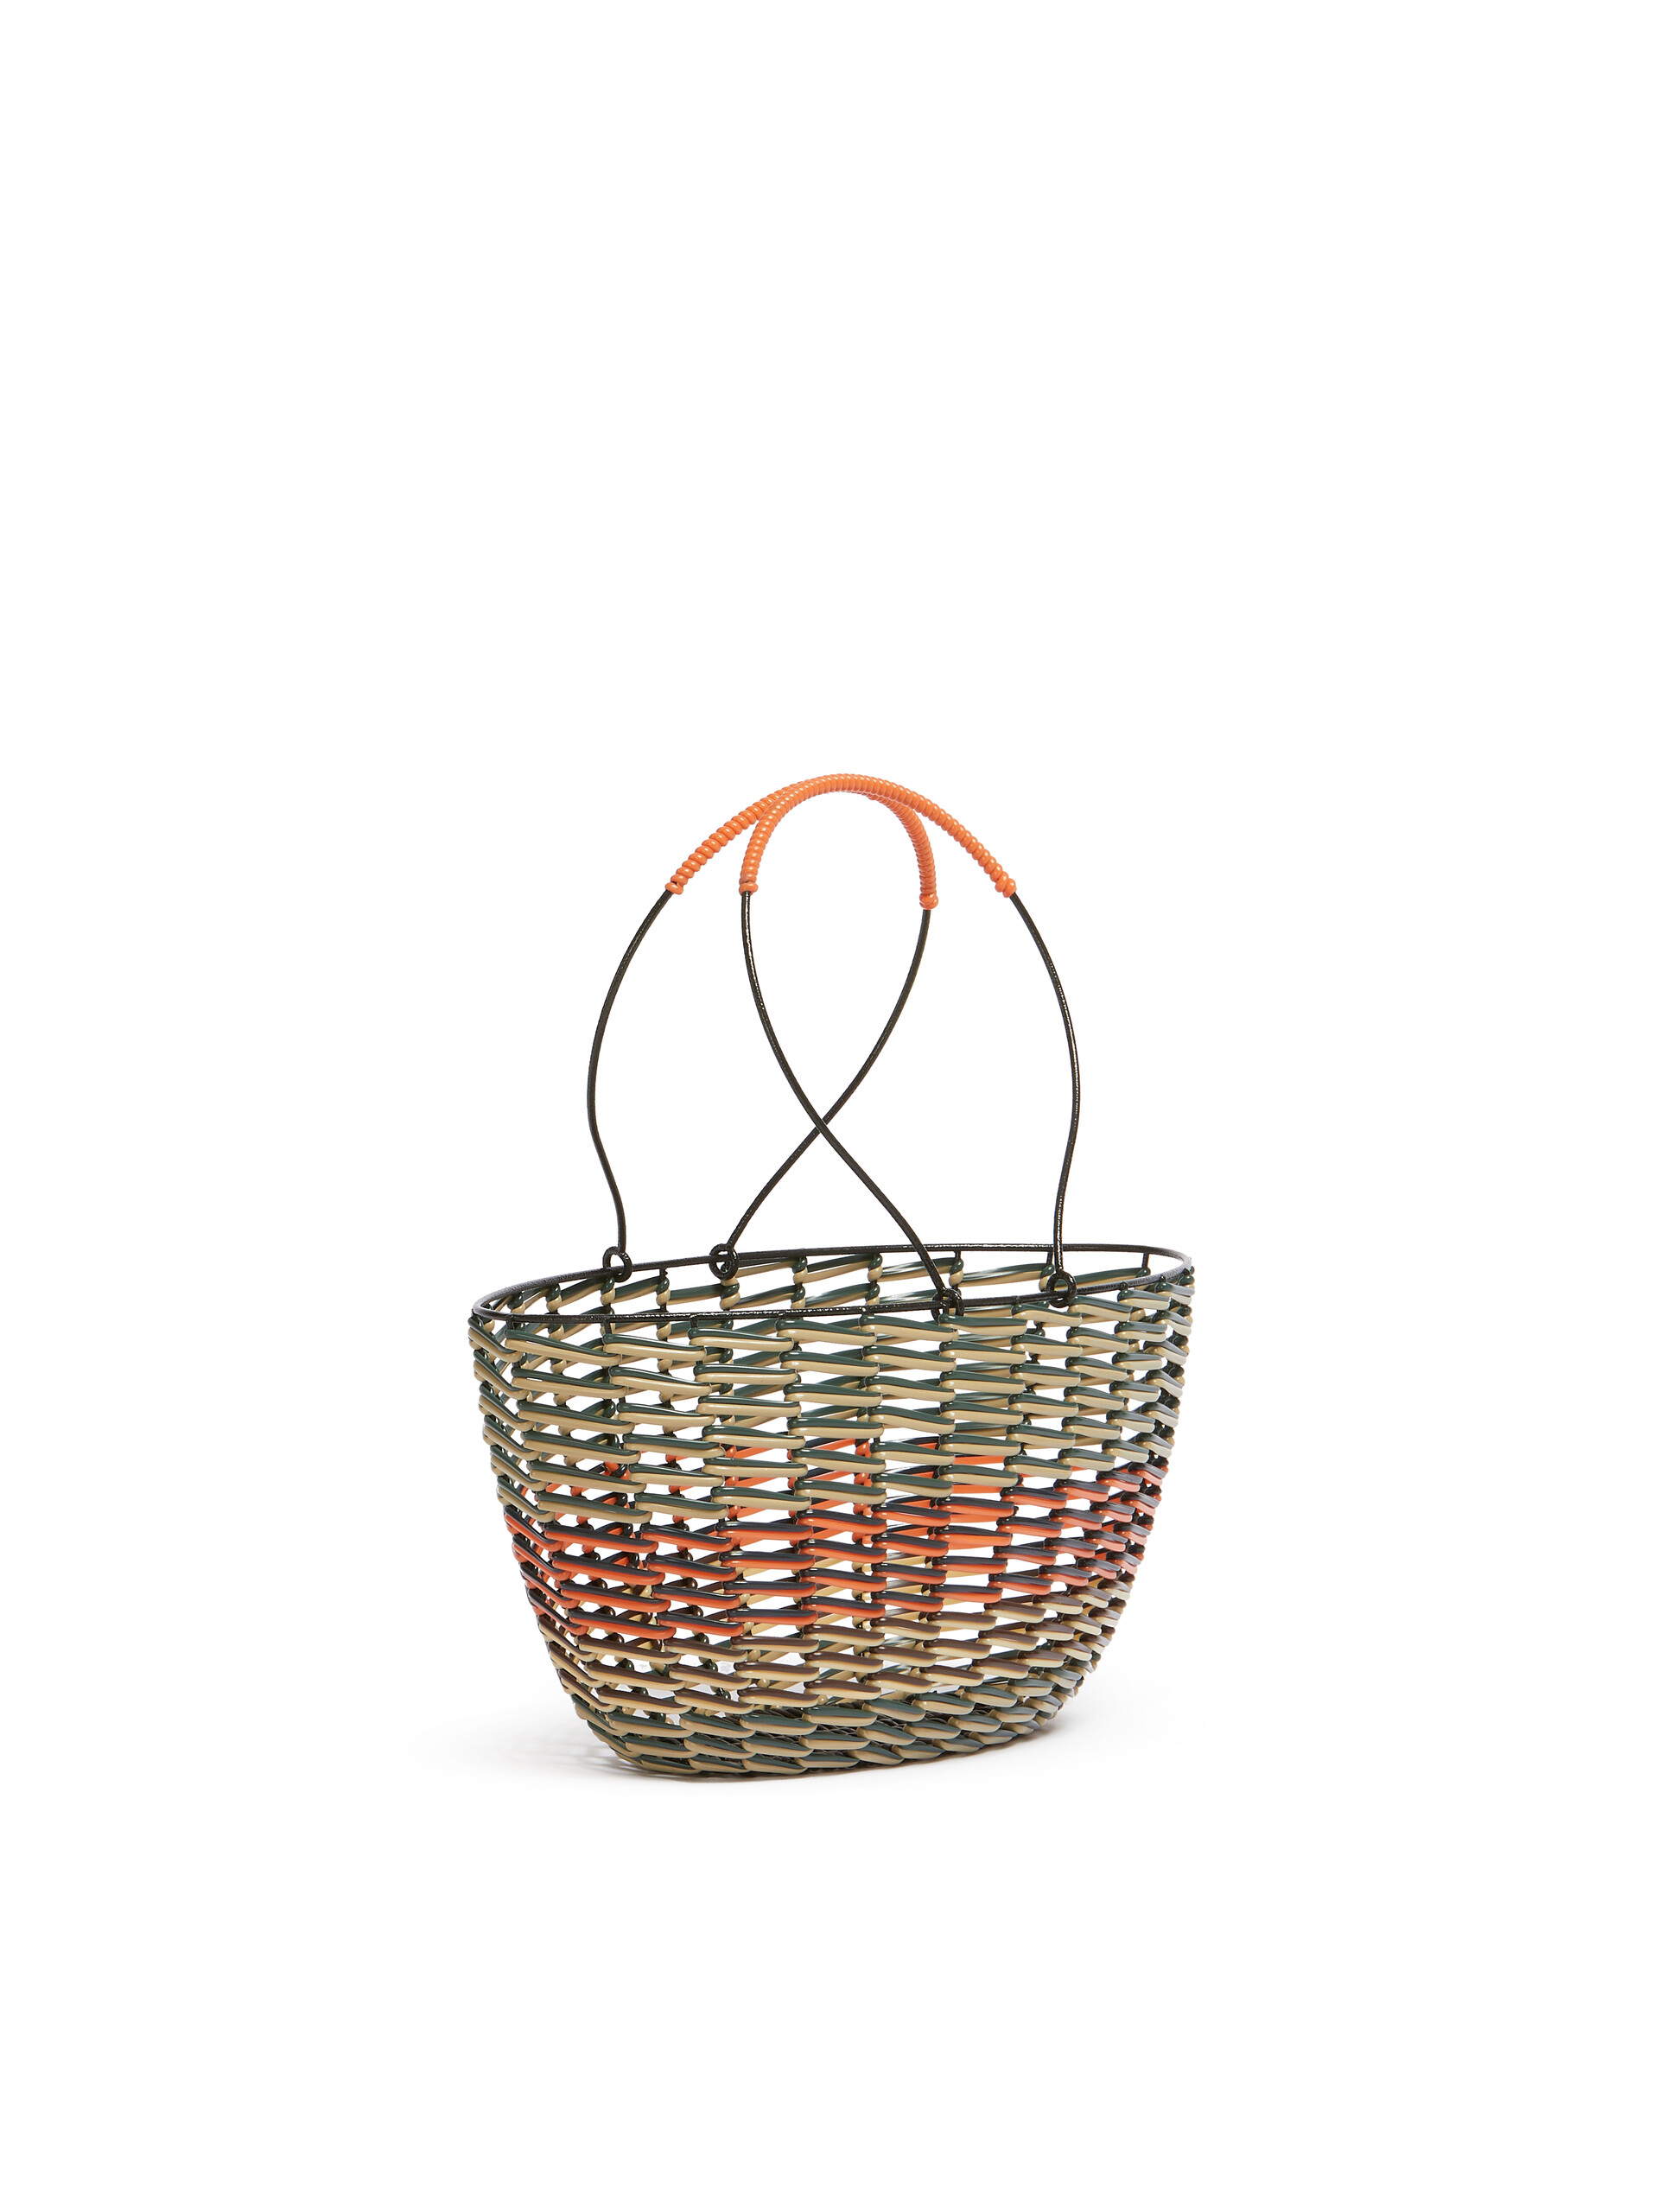 Green And Orange Marni Market Kitchen Basket - Accessories - Image 2